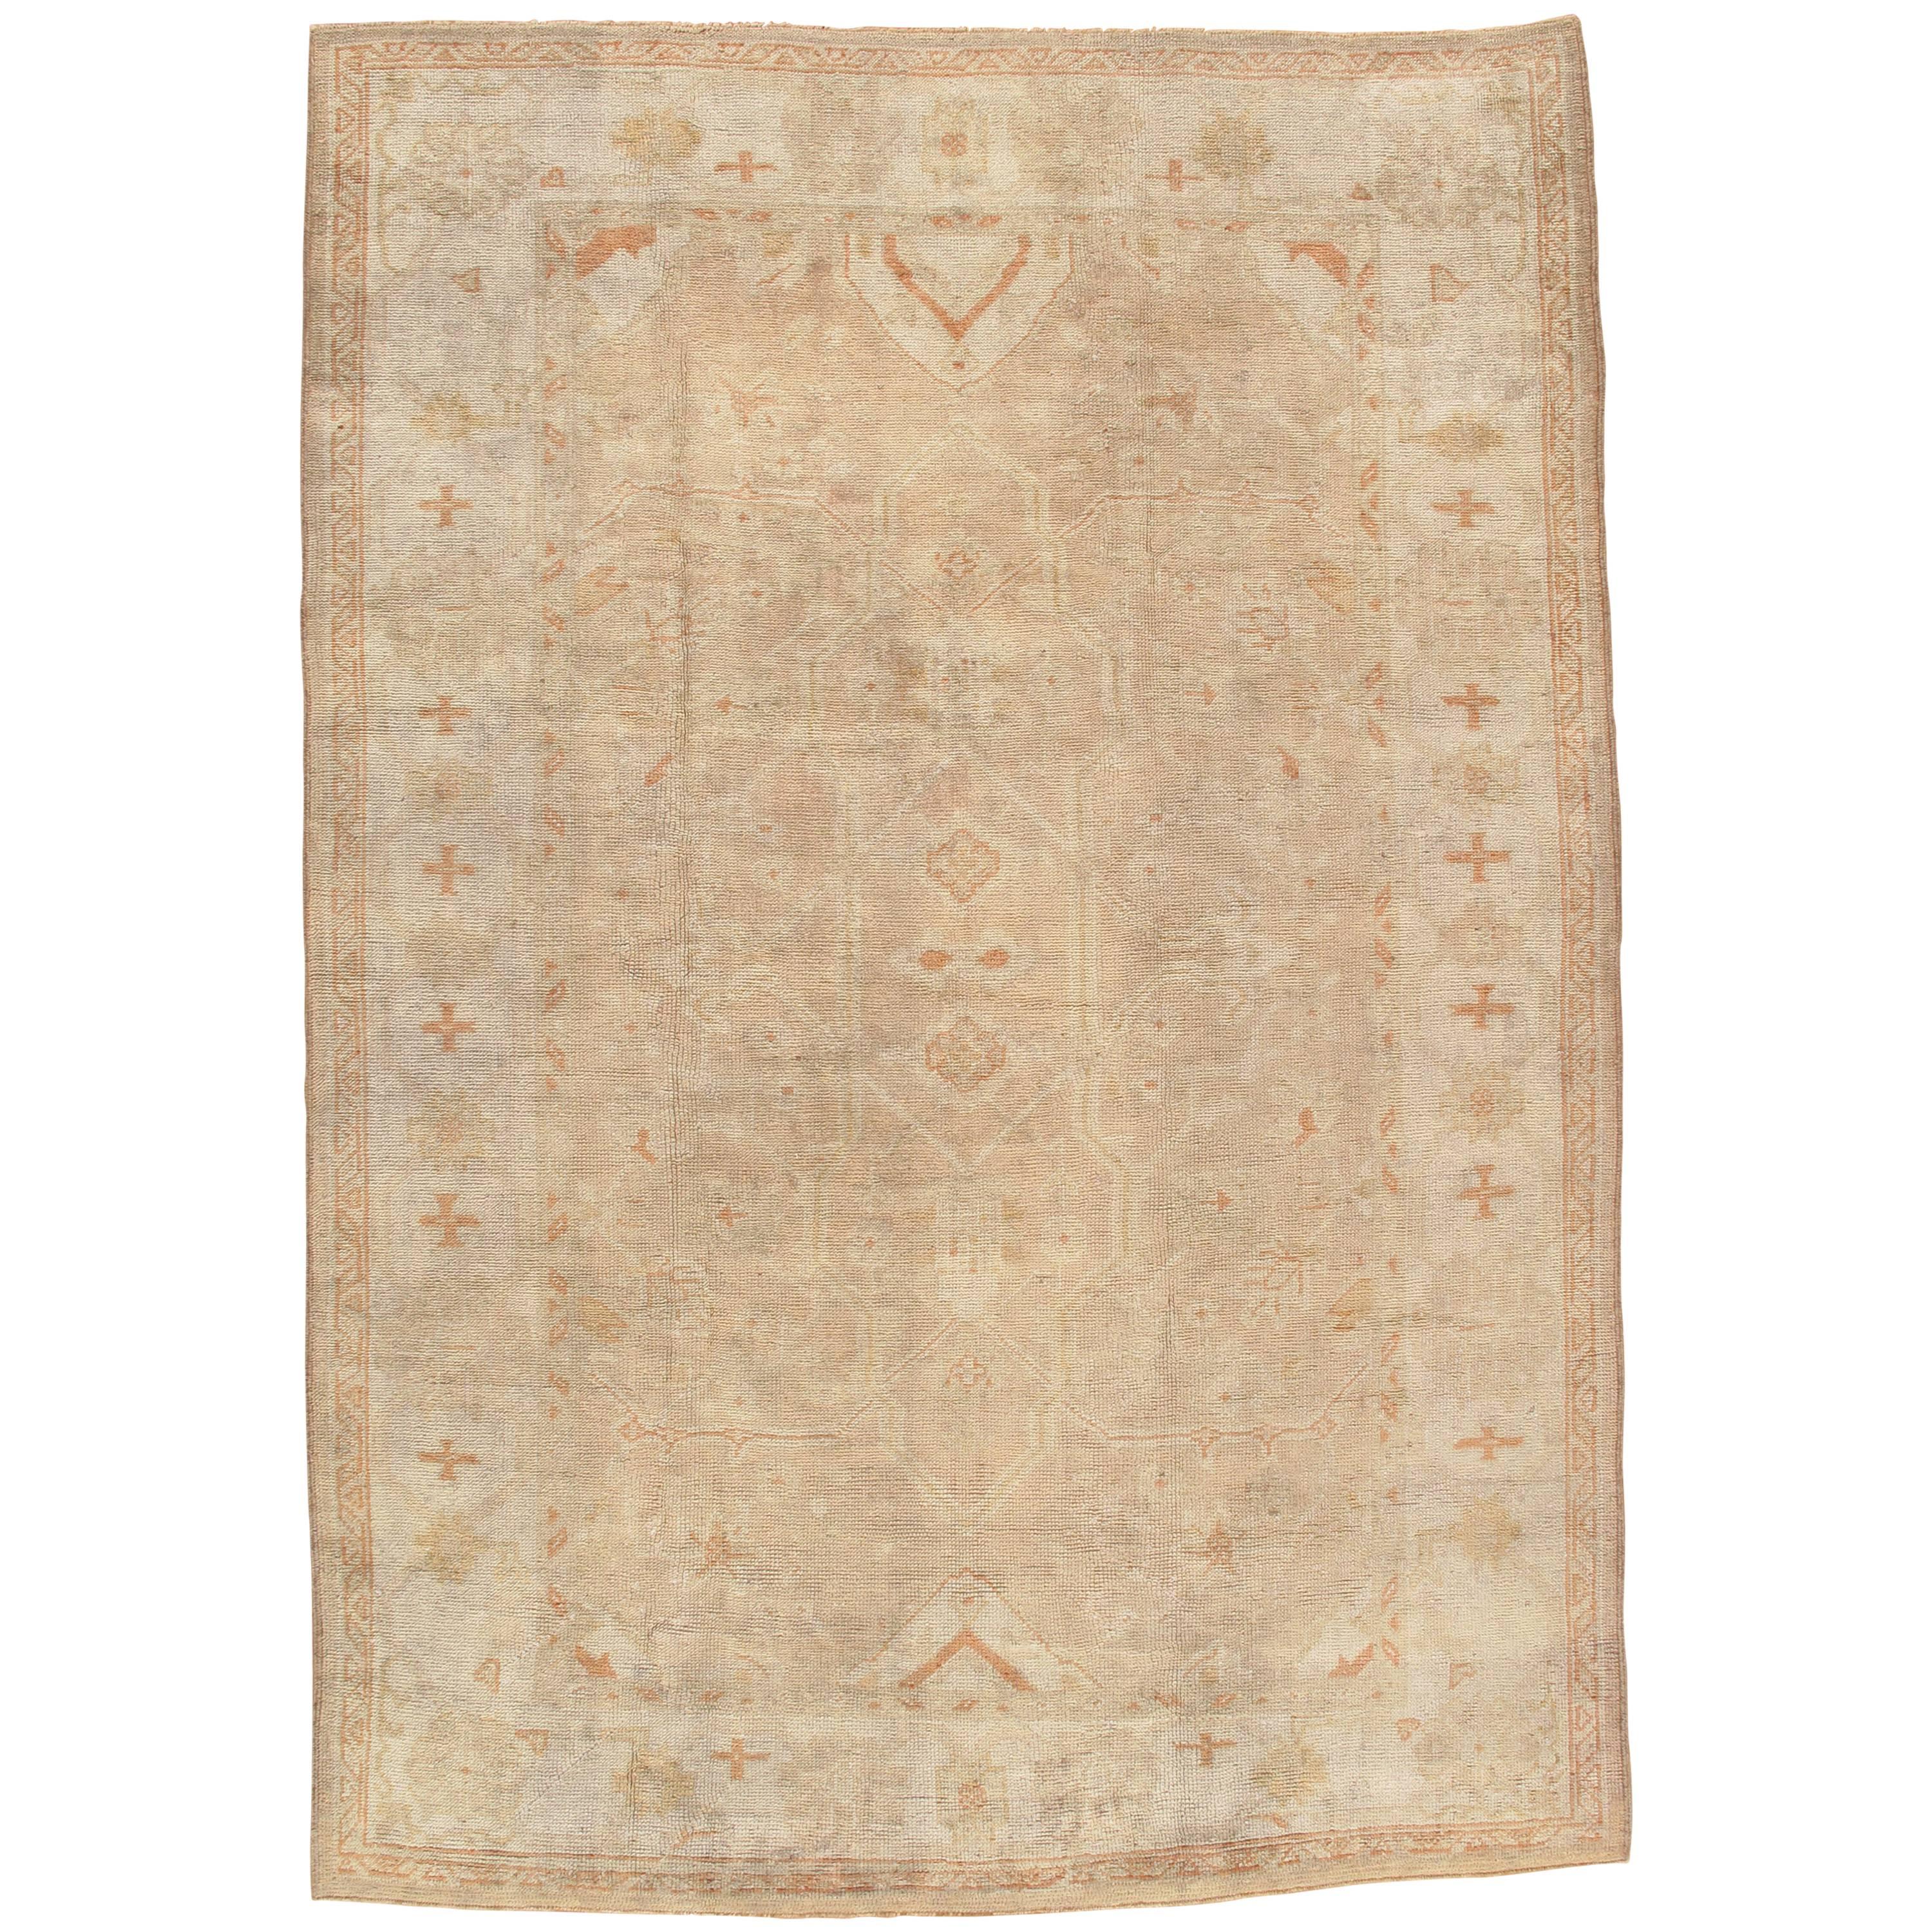 Antique Oushak Carpet, Oriental Rug, Handmade Turkish, Ivory and Soft Coral